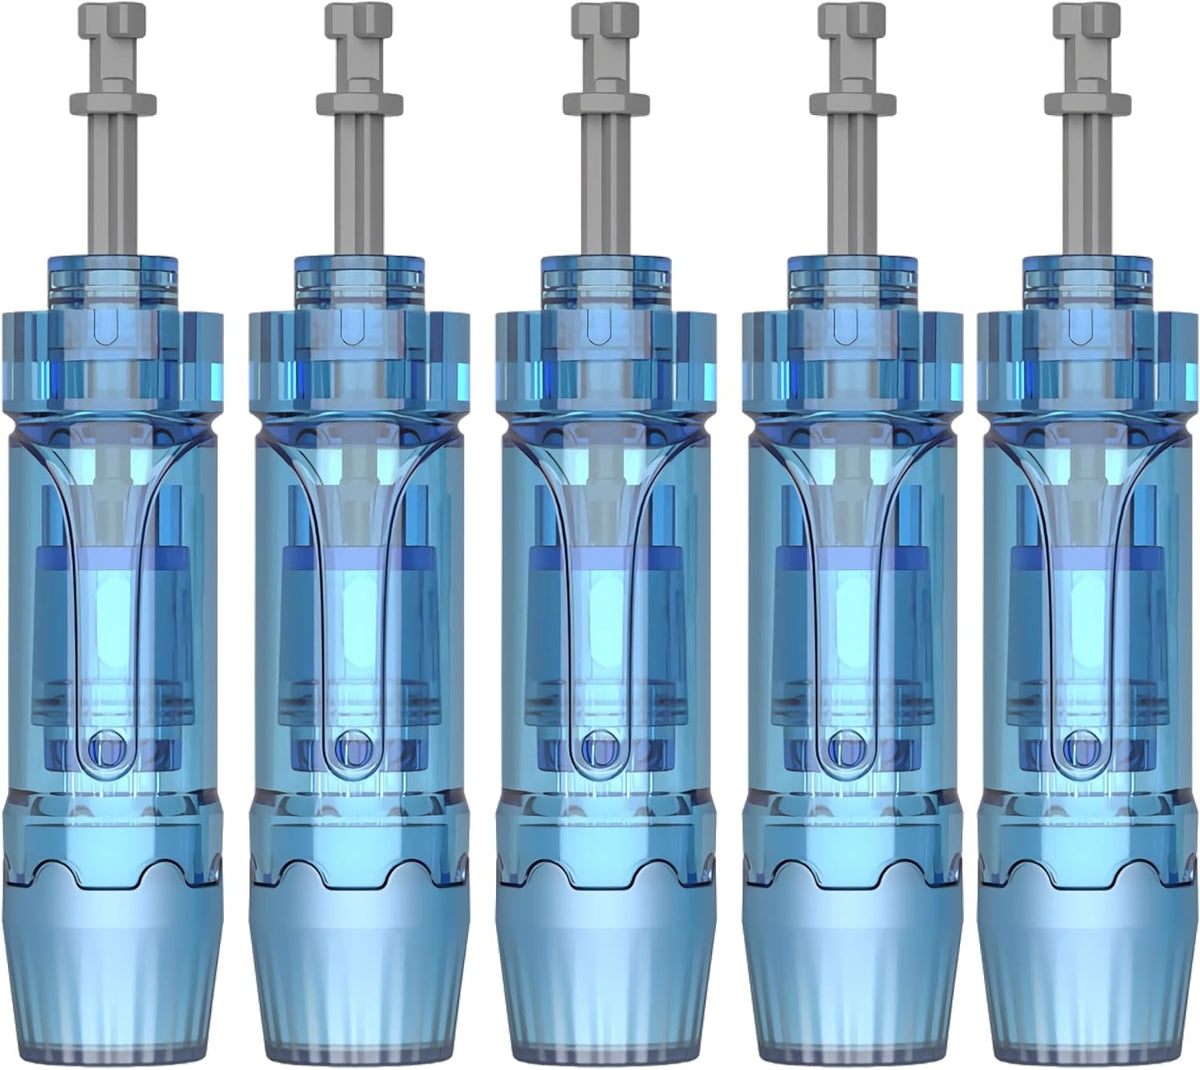 Dr.pen A9/M8S/A8S/A11 Nano S Needle Cartridges - Disposable Replacement Needles